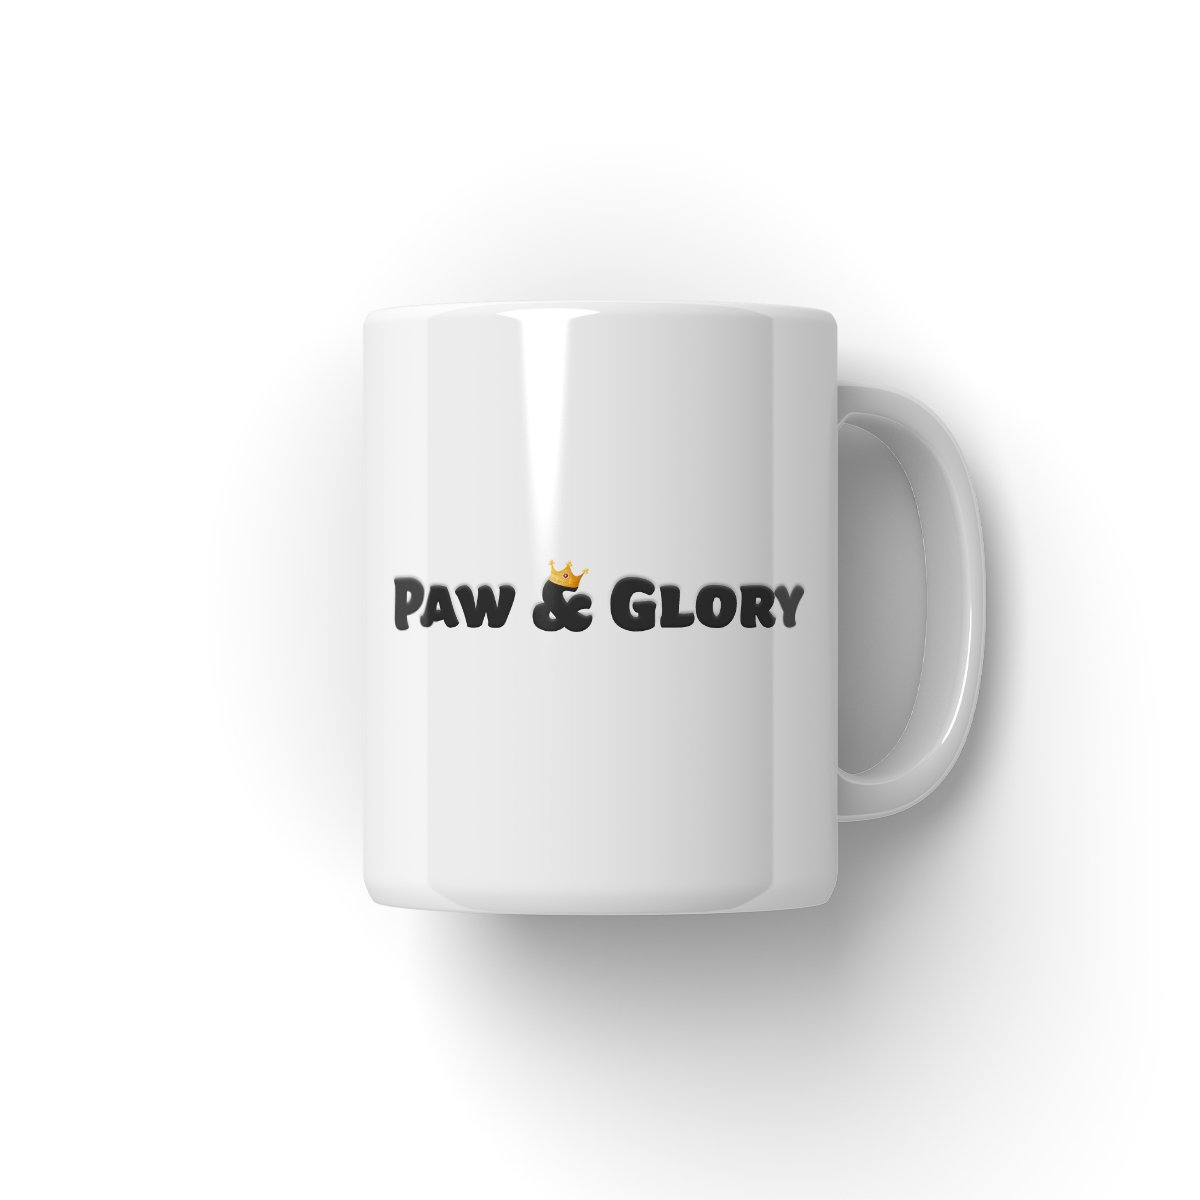 Paw & Glory, paw and glory, dog on mug, pet art mug, personalized puppy mug, personalised dog mug, mug with dog picture, personalised mugs dog, Pet Portrait Mug